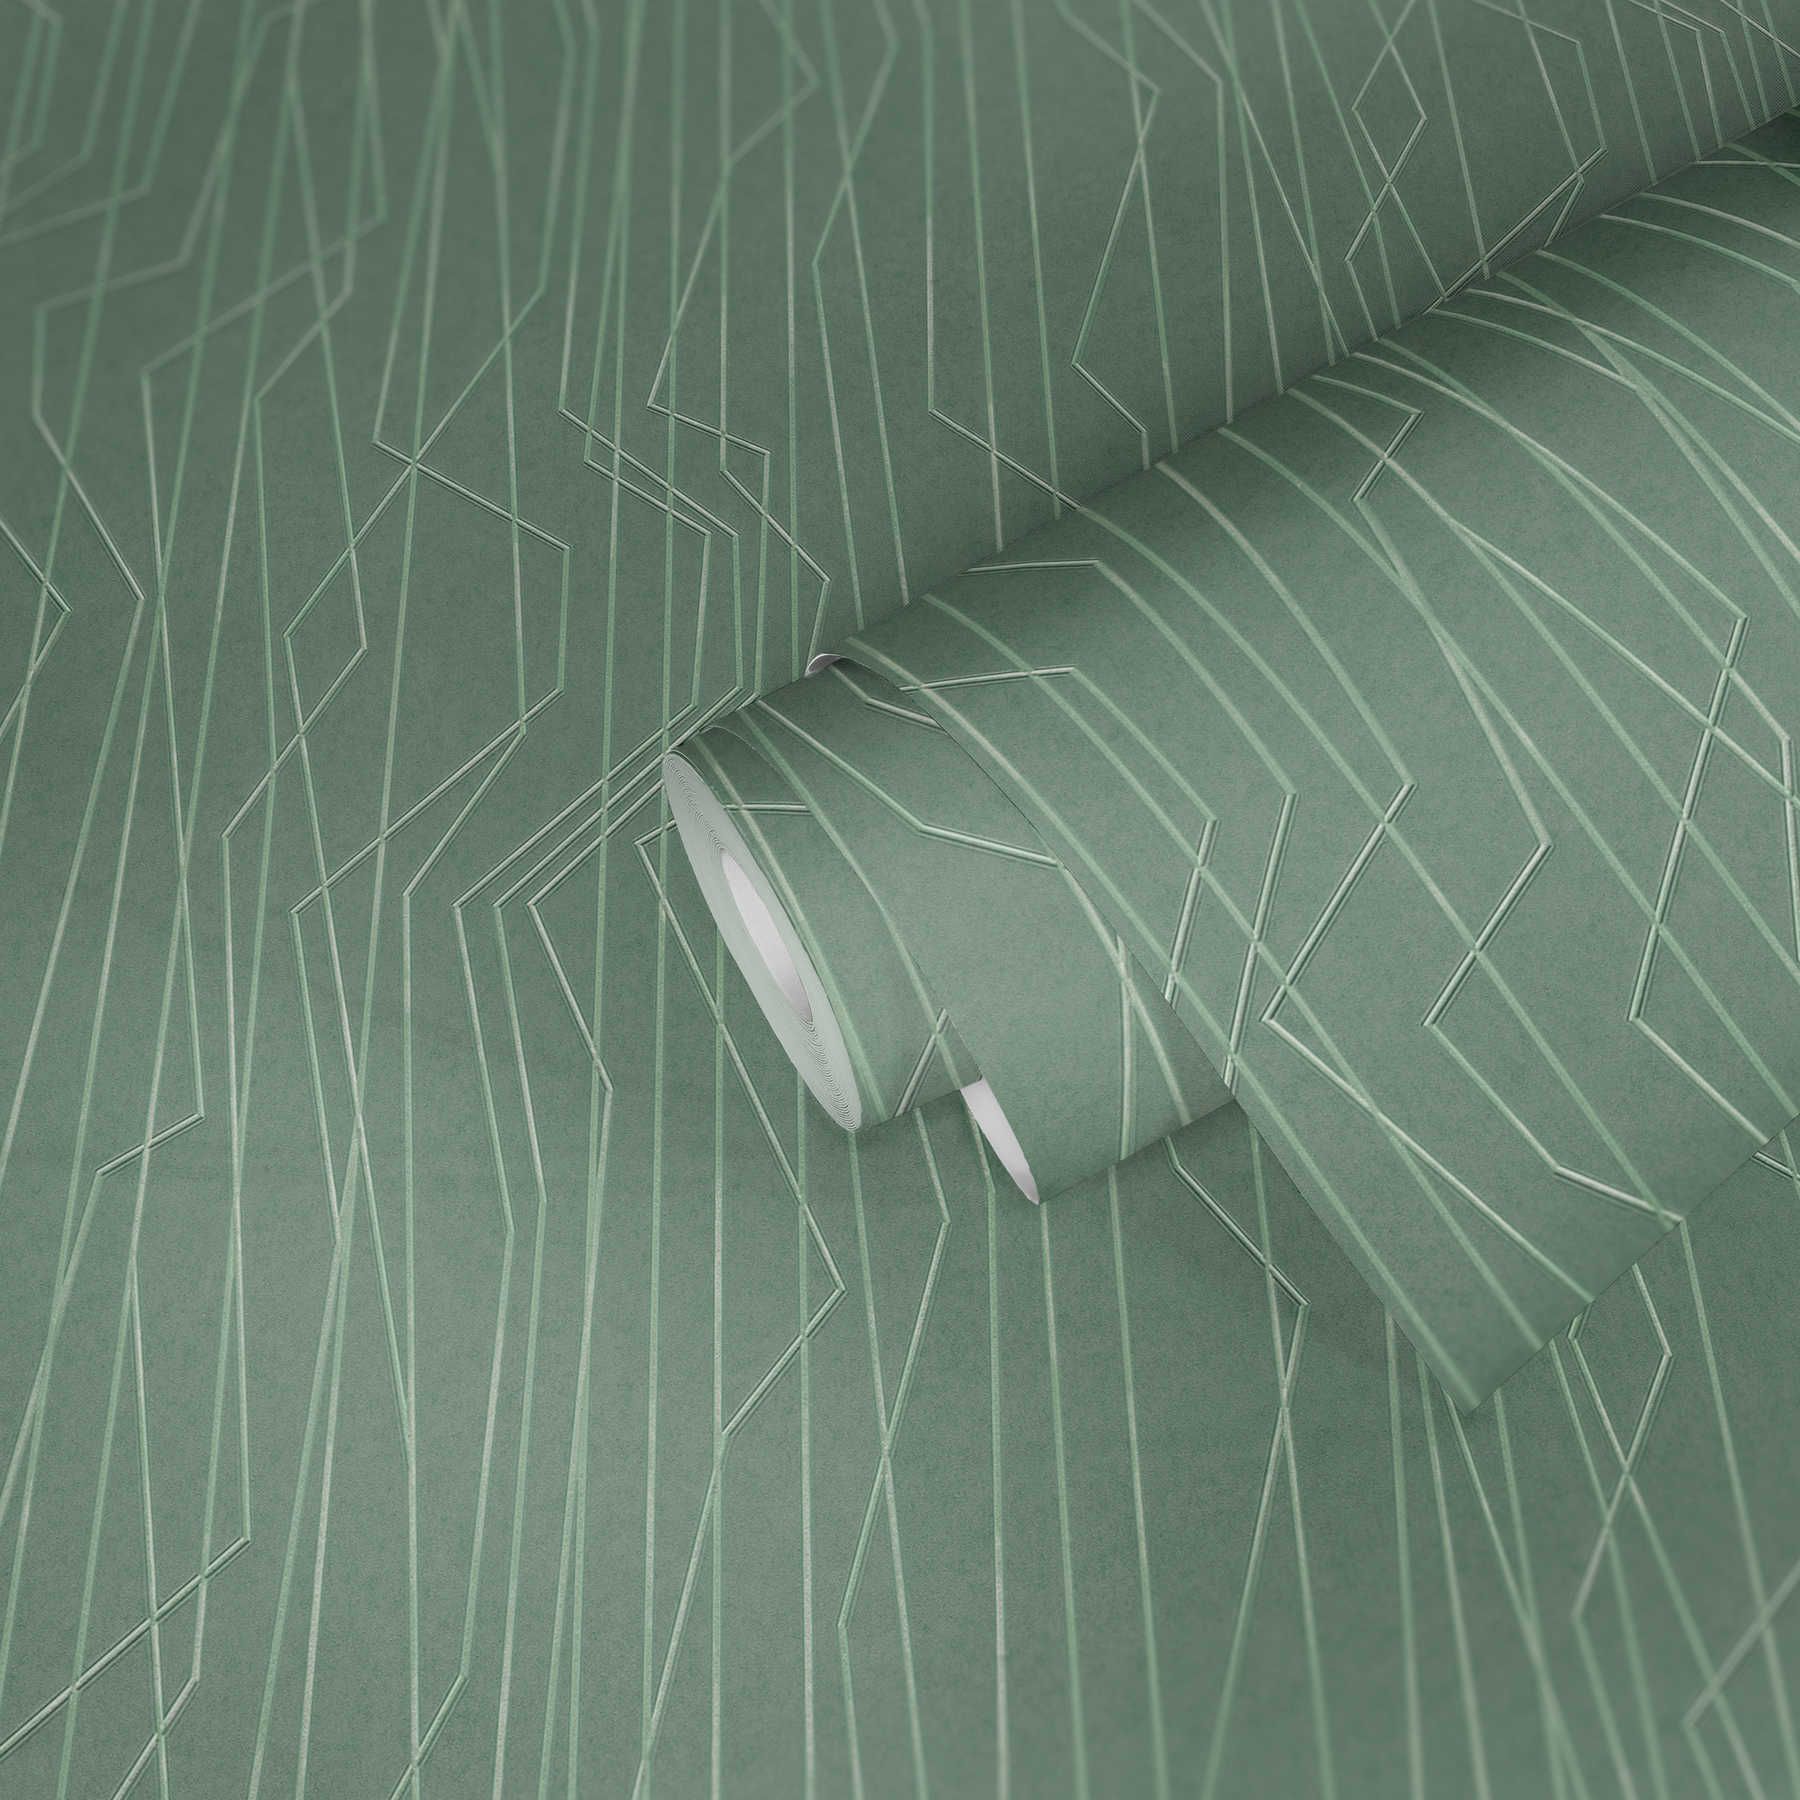             Grüne Vliestapete mit geprägtem Muster – Grün
        